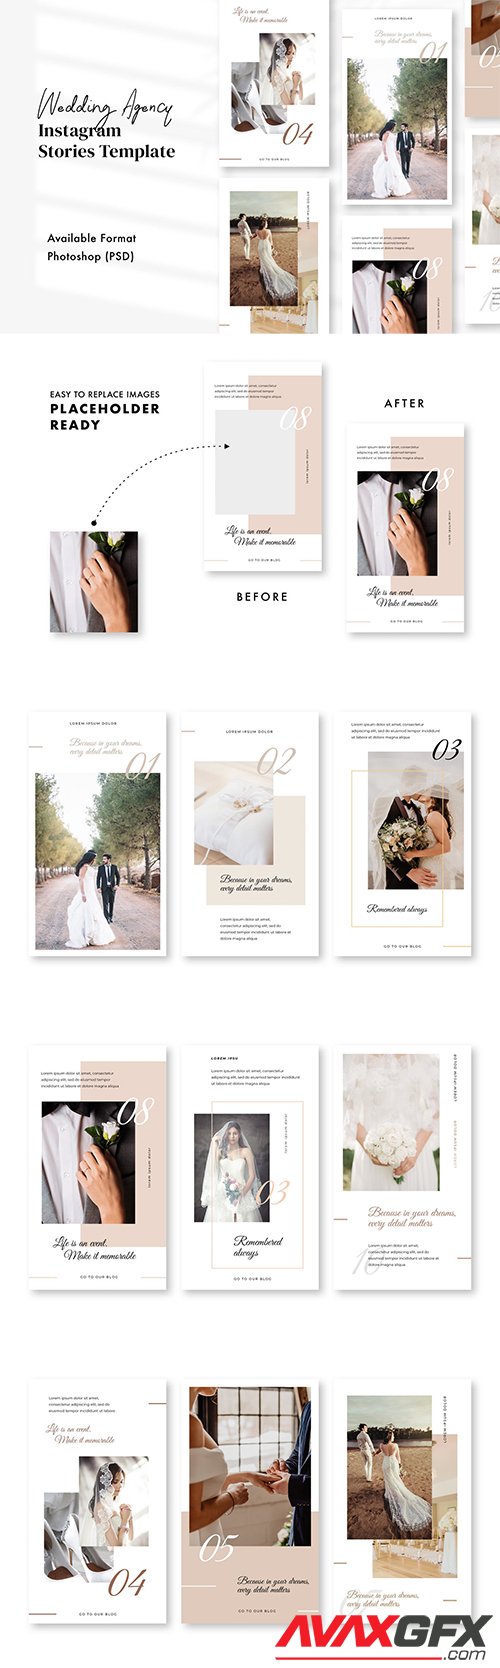 Wedding Agency Instagram Stories Template